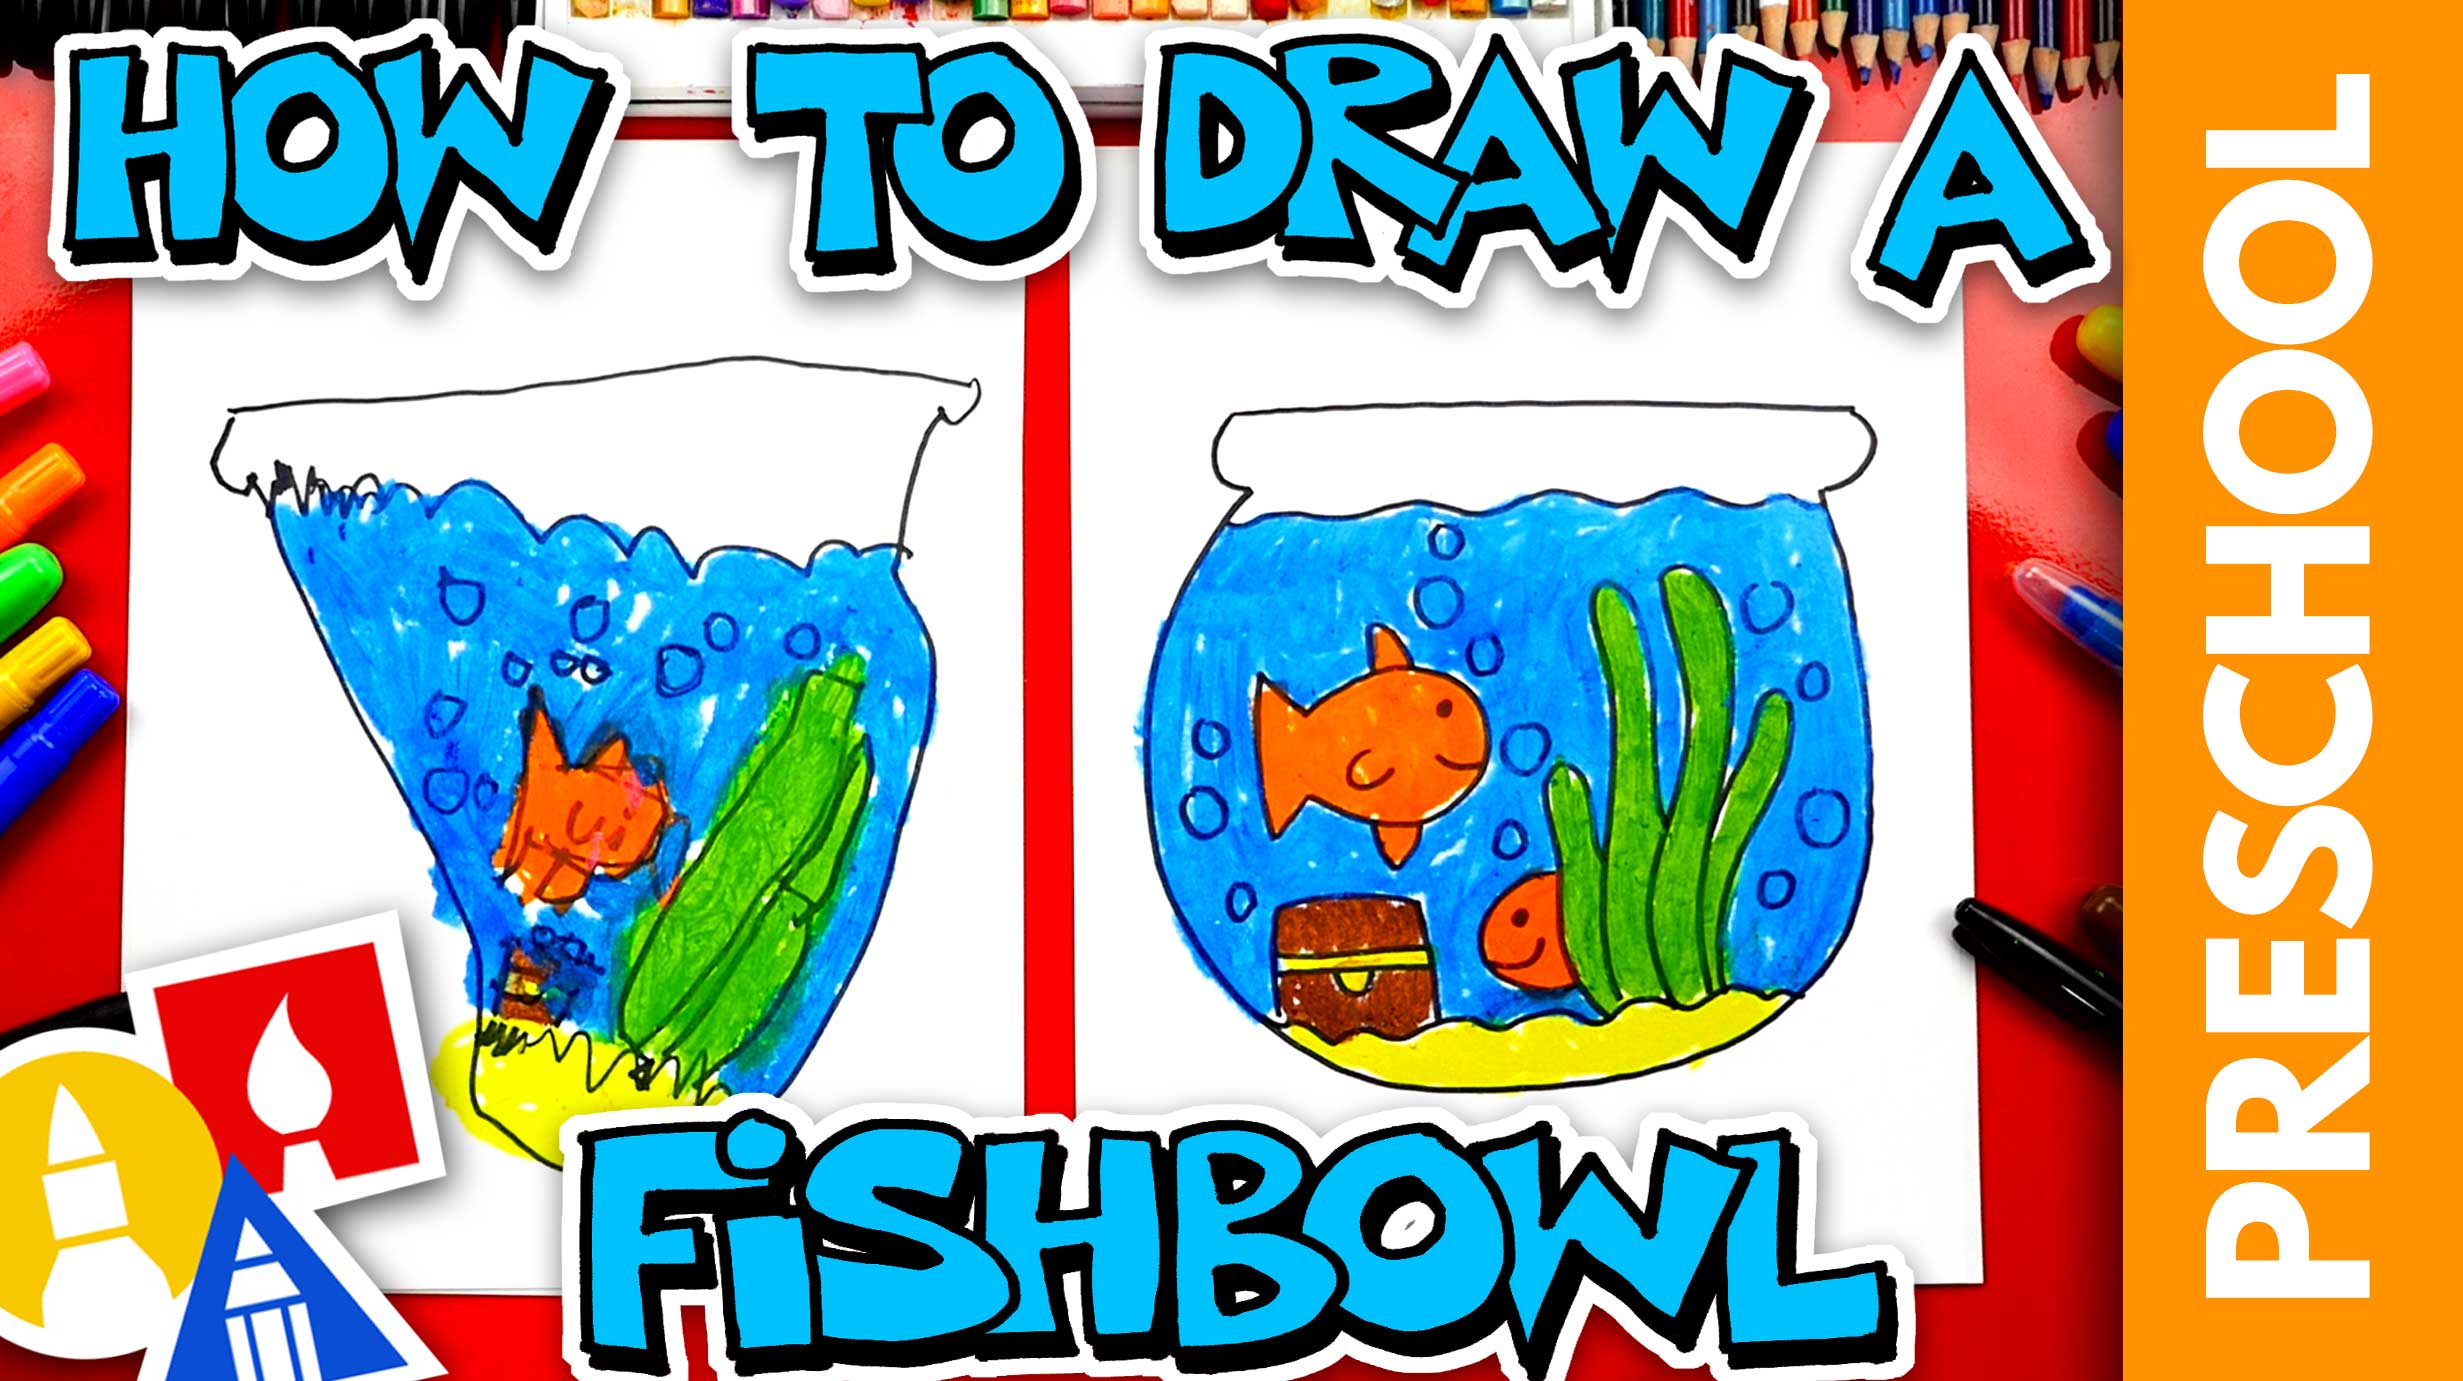 How To Draw A Fish Bowl Preschool Art For Kids Hub